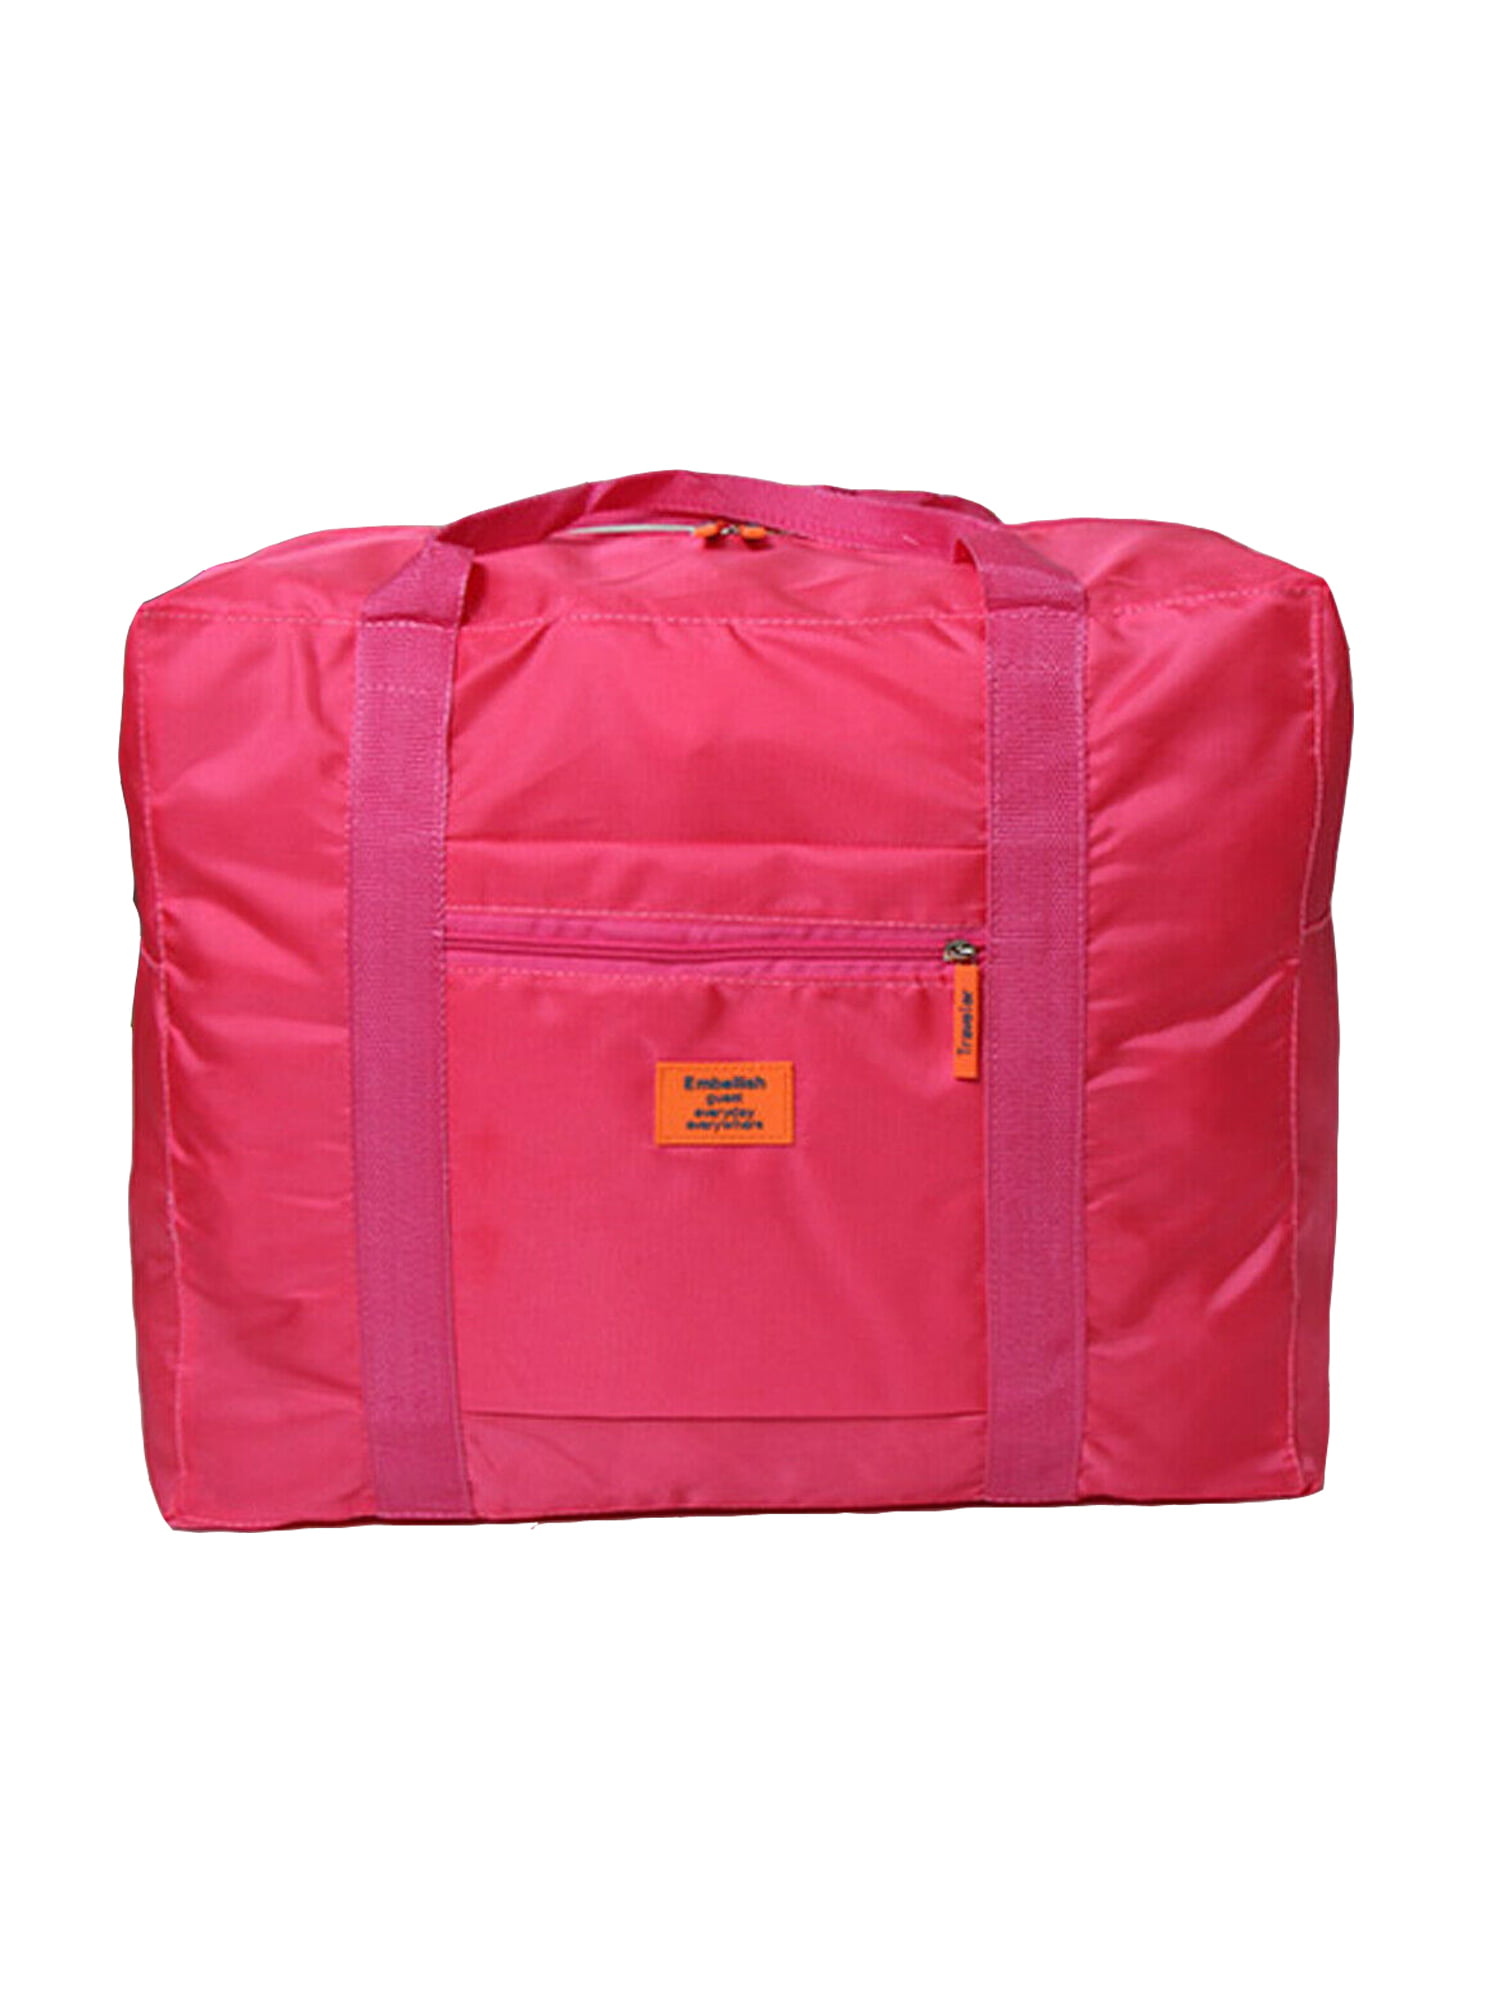 woshilaocai Foldable Large Duffel Bag - 0 - 0